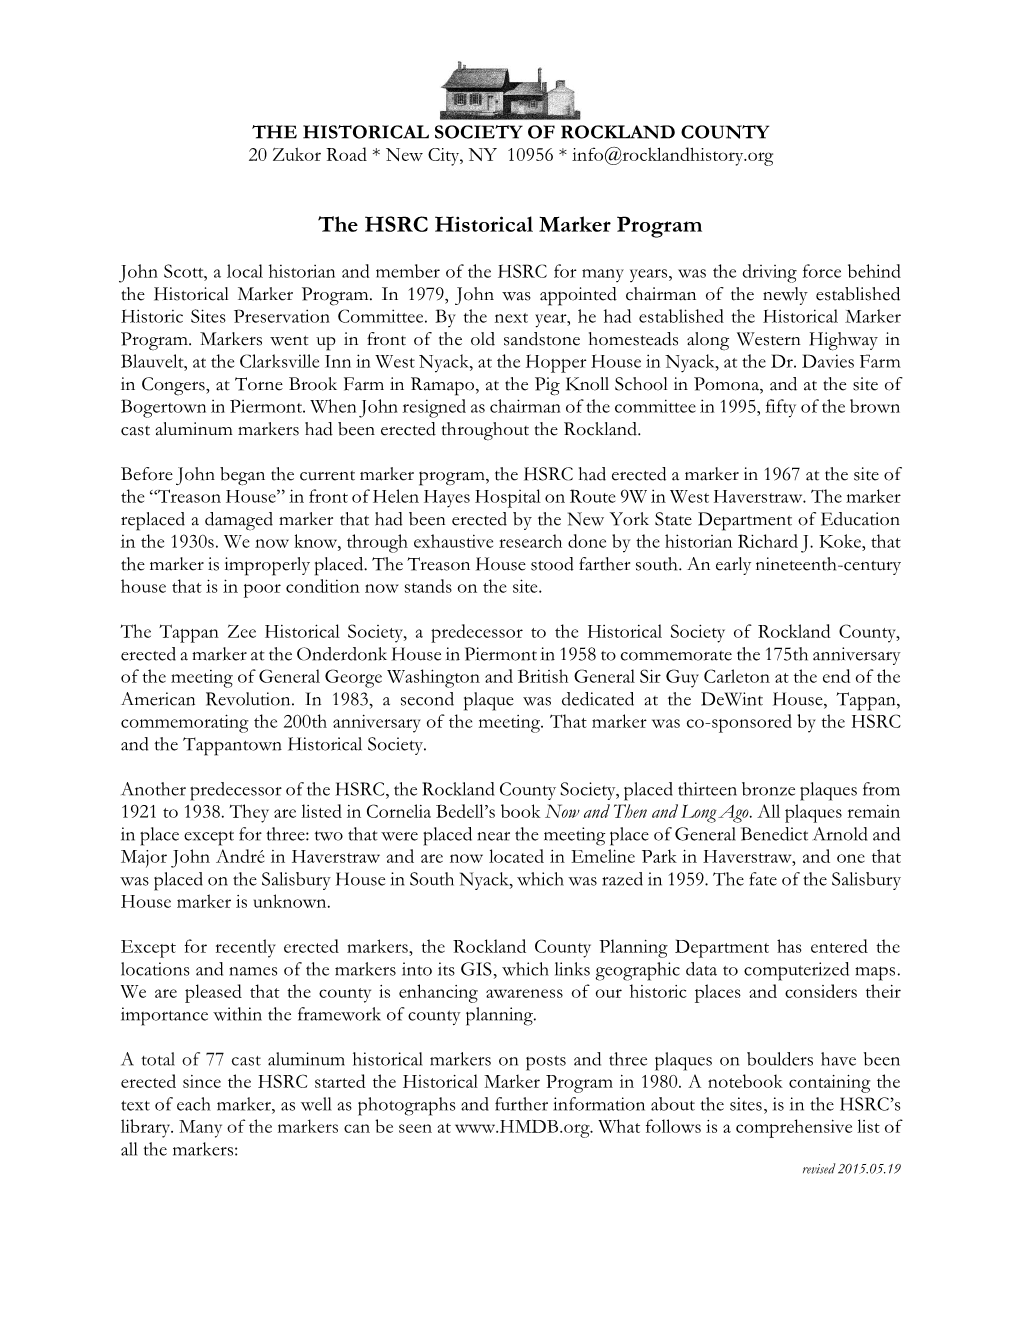 The HSRC Historical Marker Program